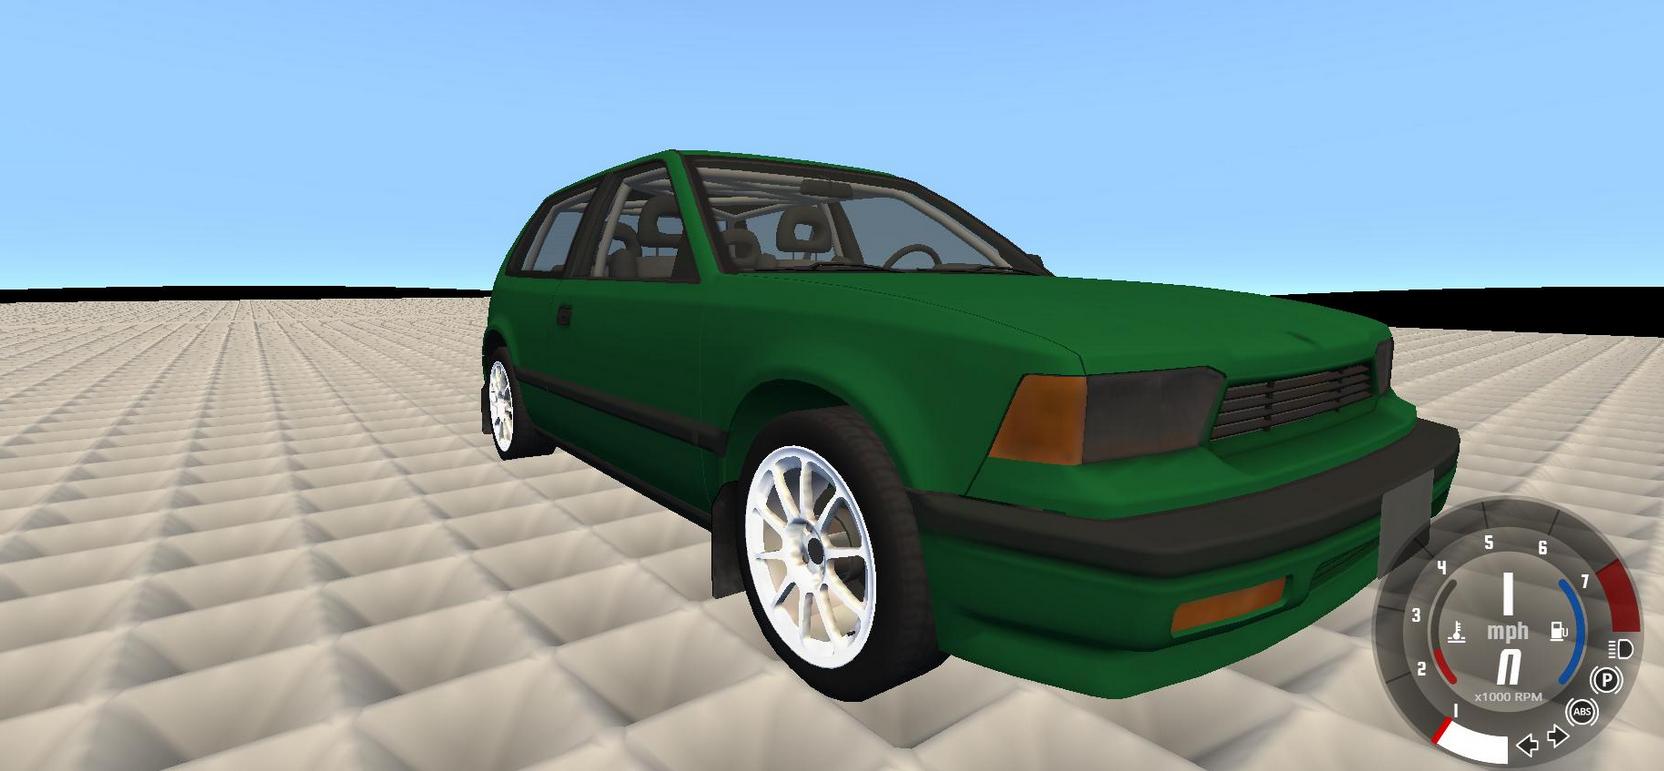 BEAMNG Drive мод на 2111. Audi 100 c4 1992 для BEAMNG Drive. BEAMNG Drive дальнобойщики 2 карта. BEAMNG Drive Mods q8. Beamng mods maps